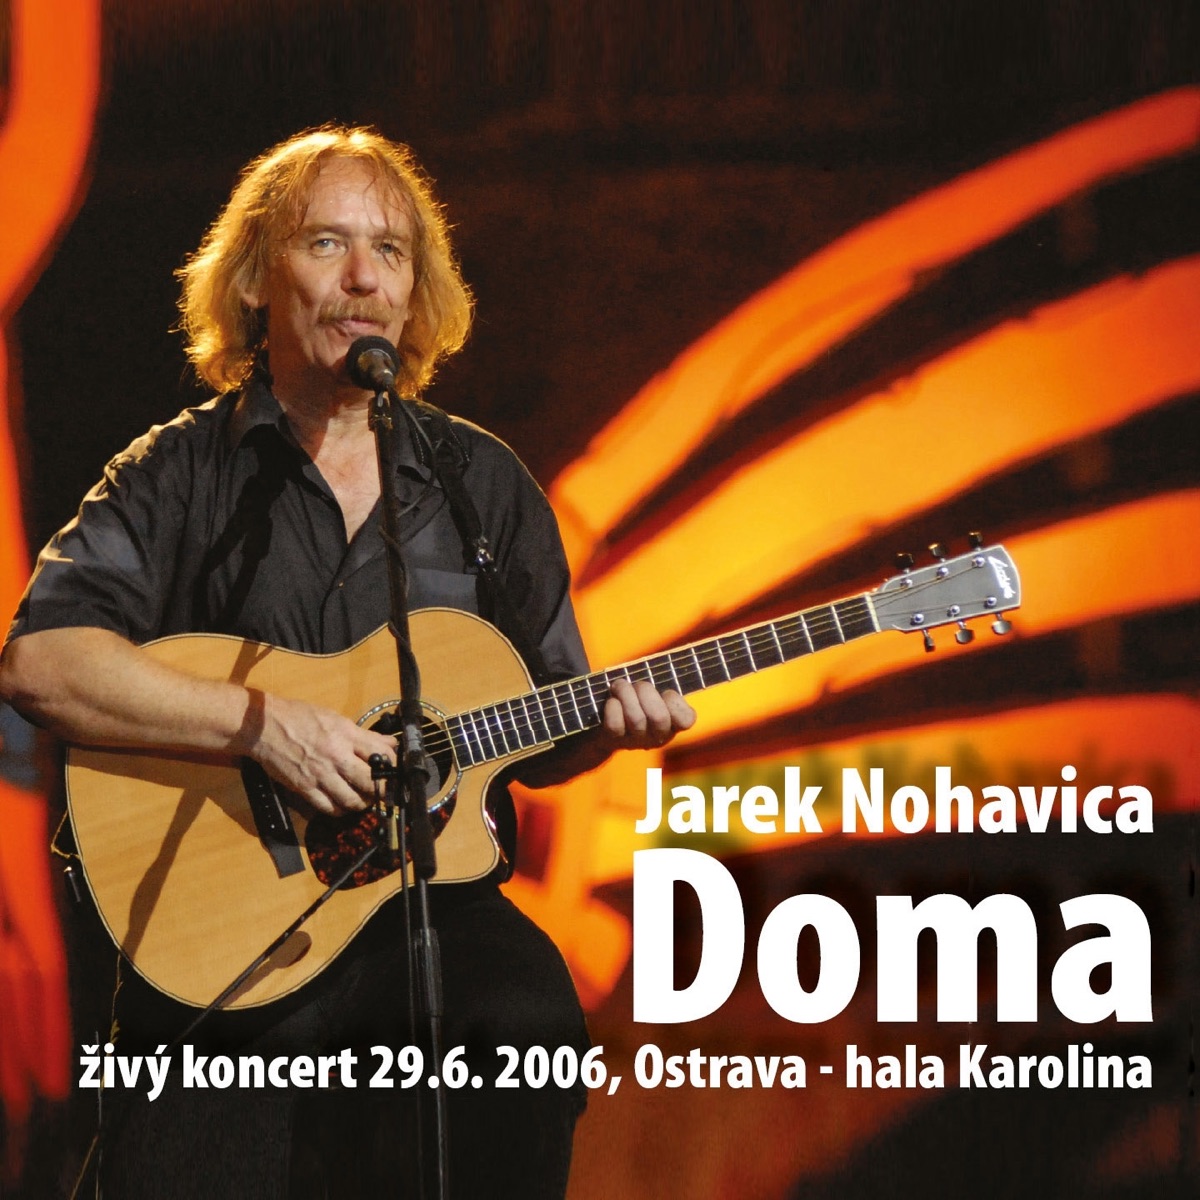 Doma (Live) - Album by Jaromír Nohavica - Apple Music